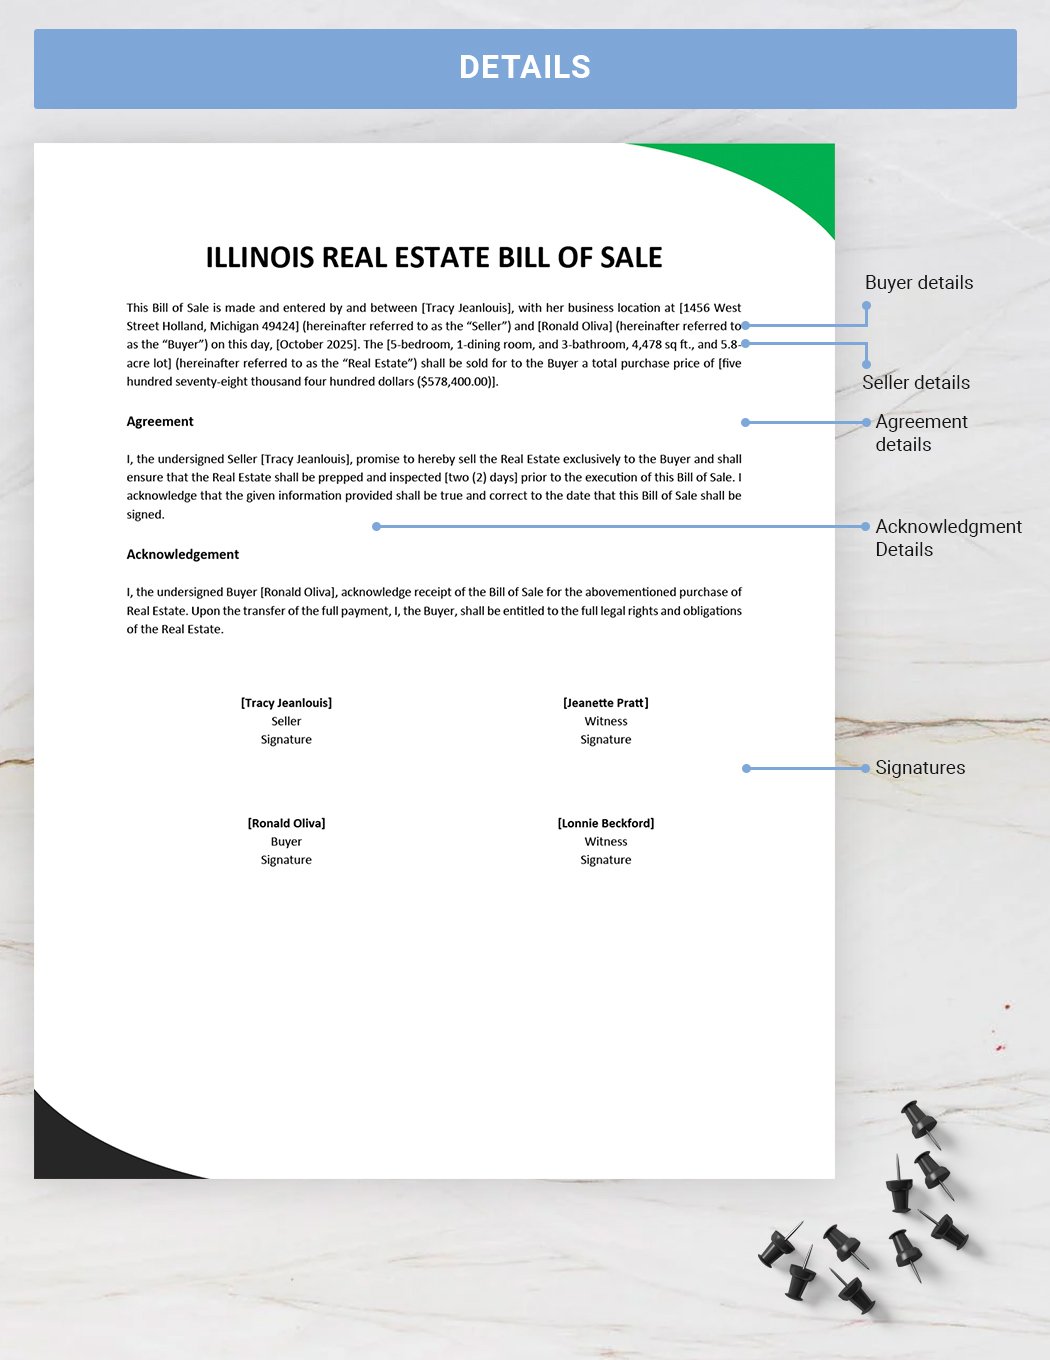 Illinois Real Estate Bill of Sale Template